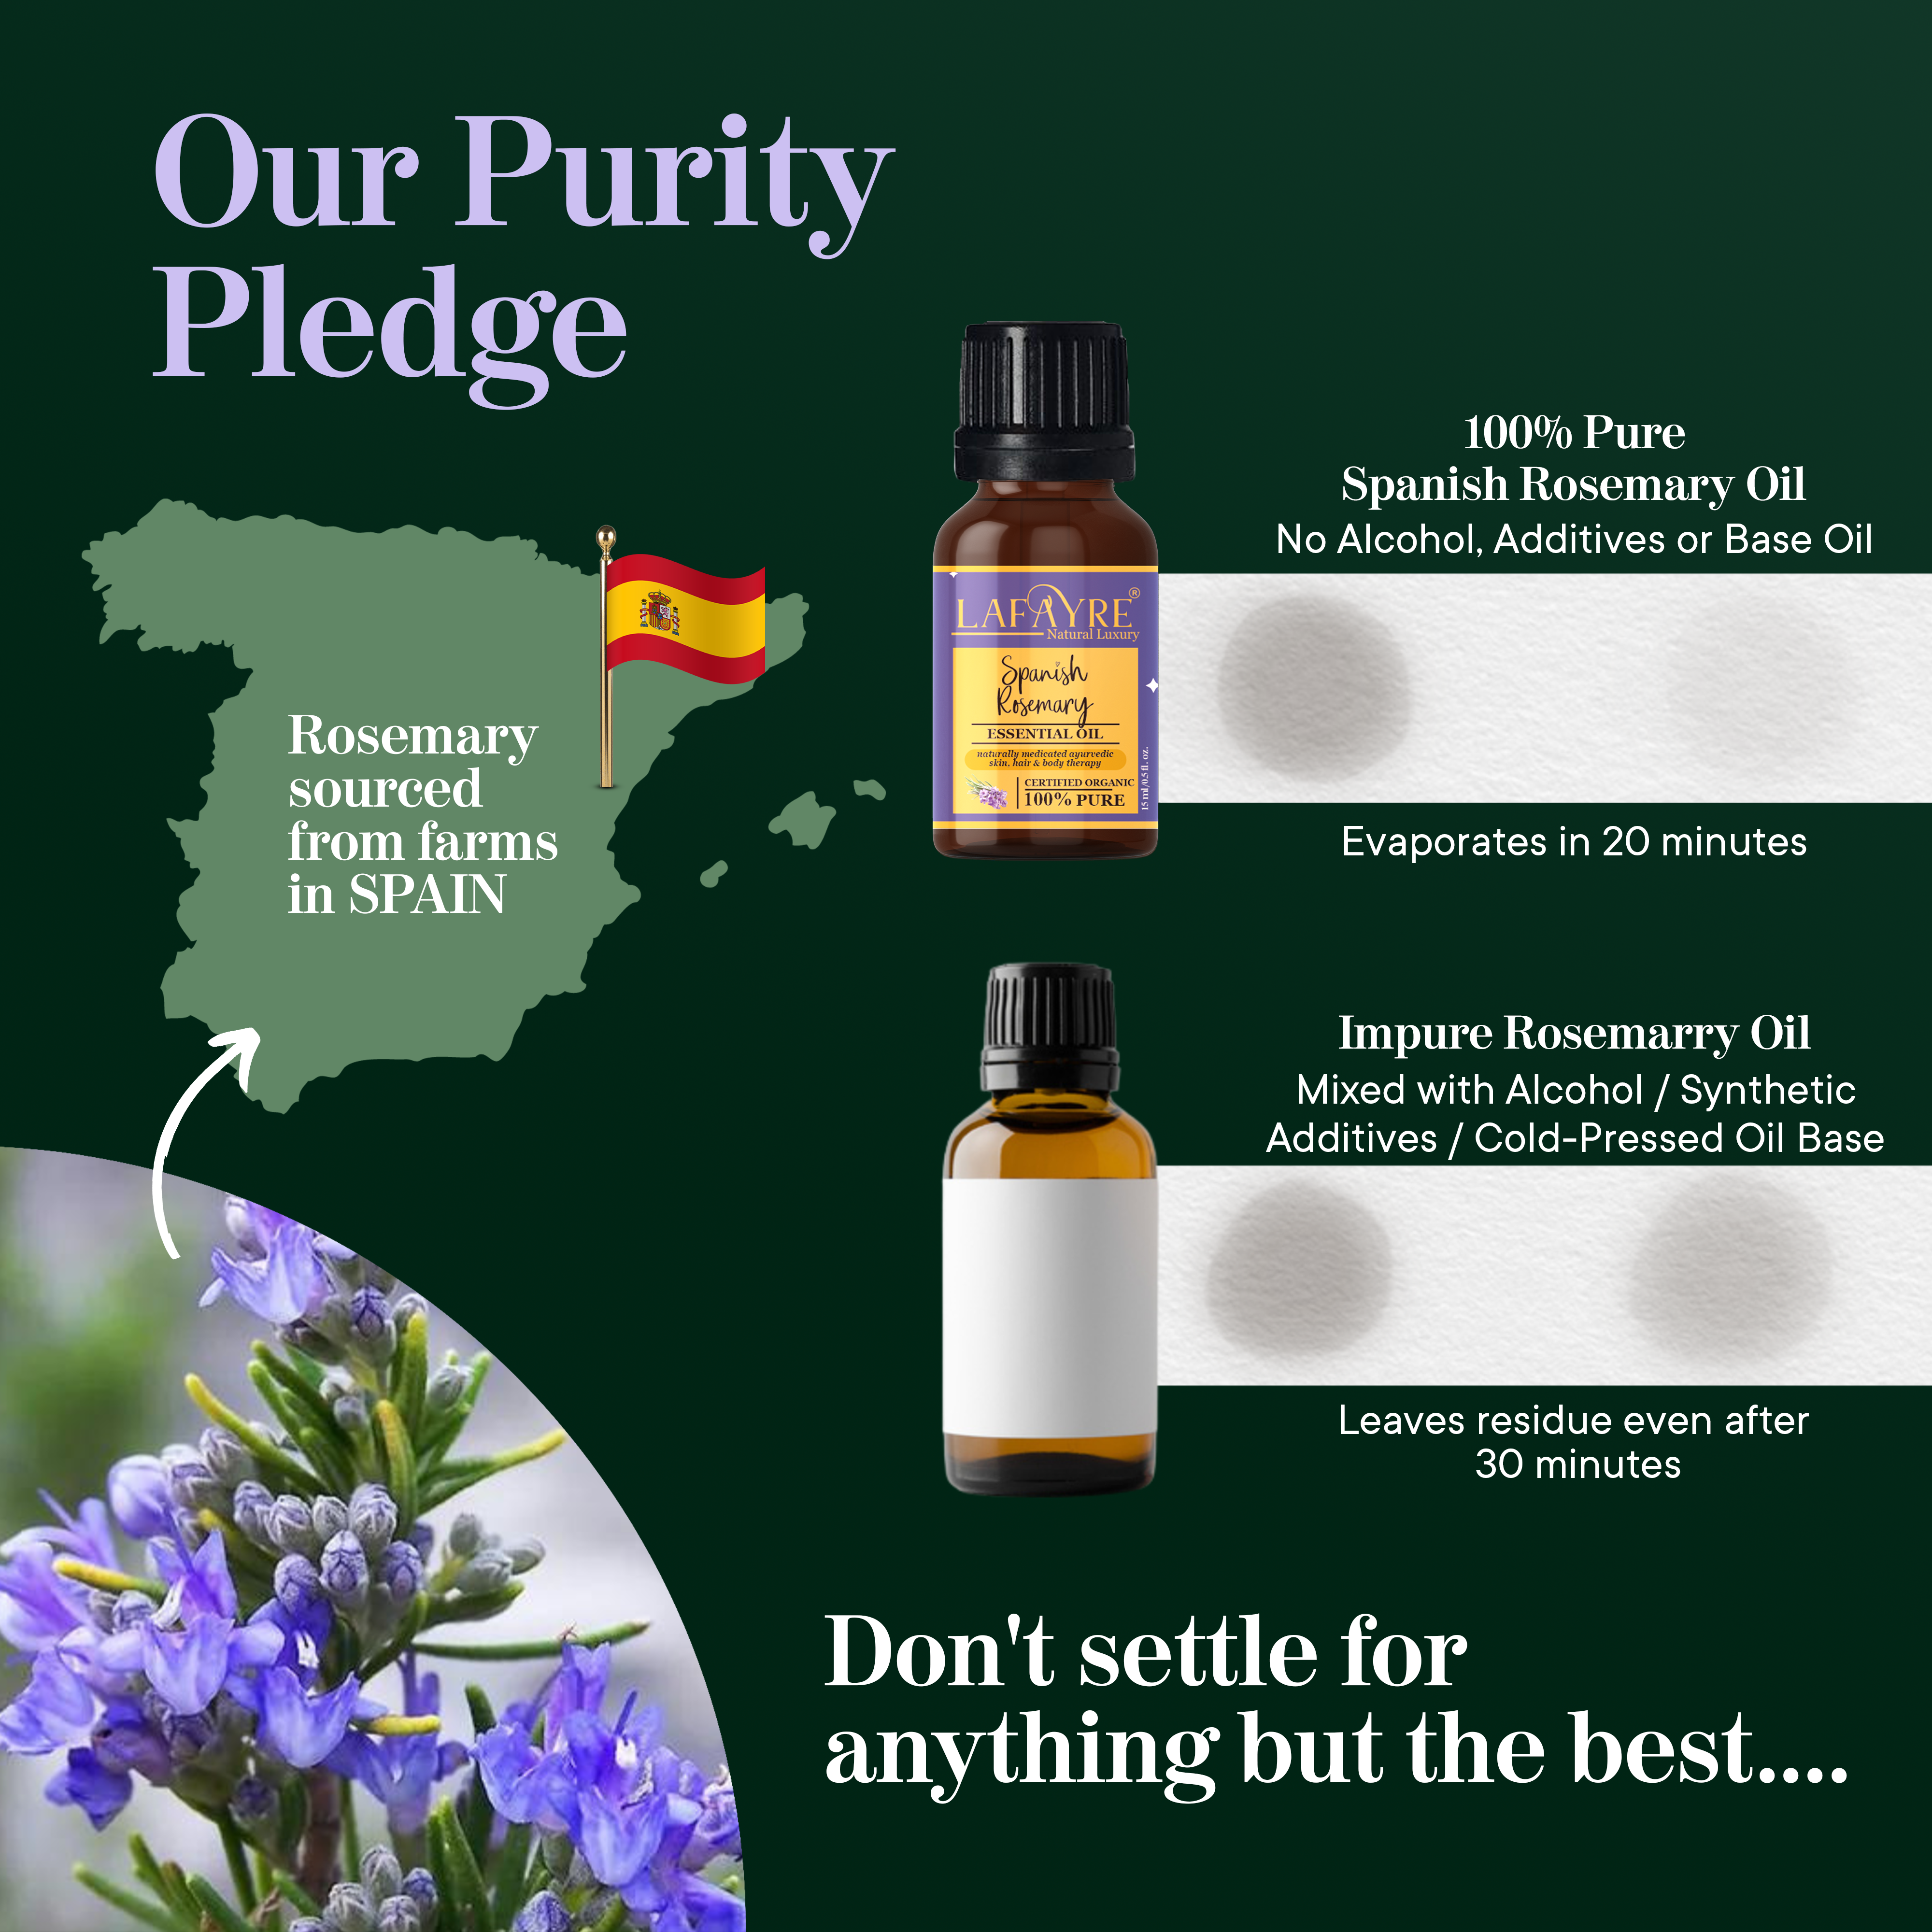 Spanish Rosemary Essential Oil Pledge